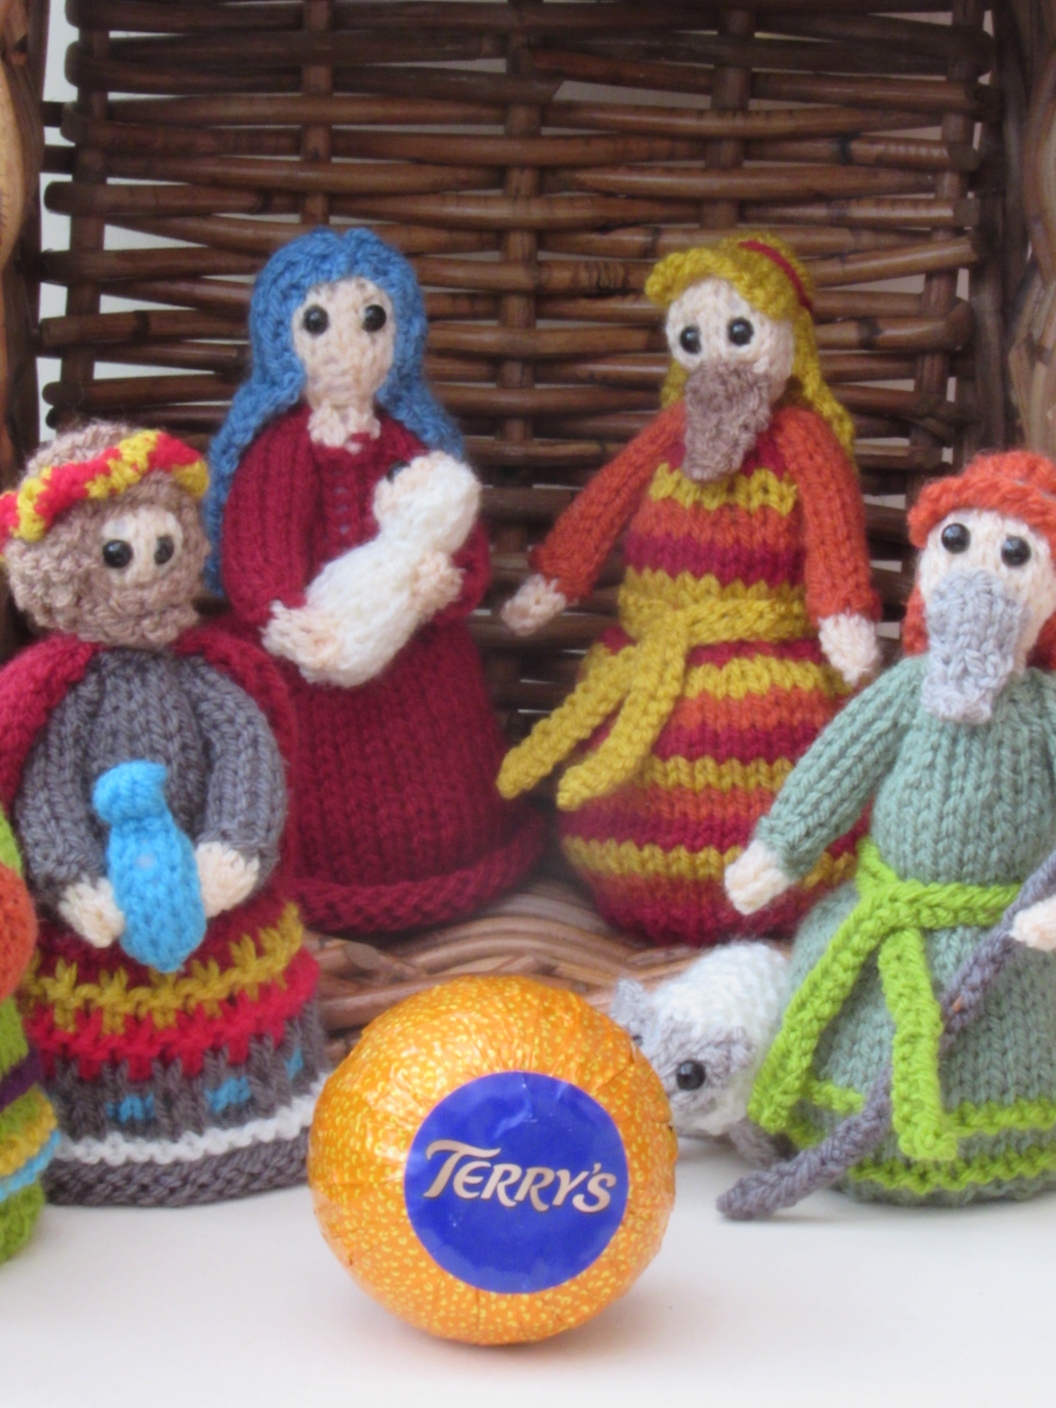 Terry’s Chocolate Orange Nativity knitting pattern